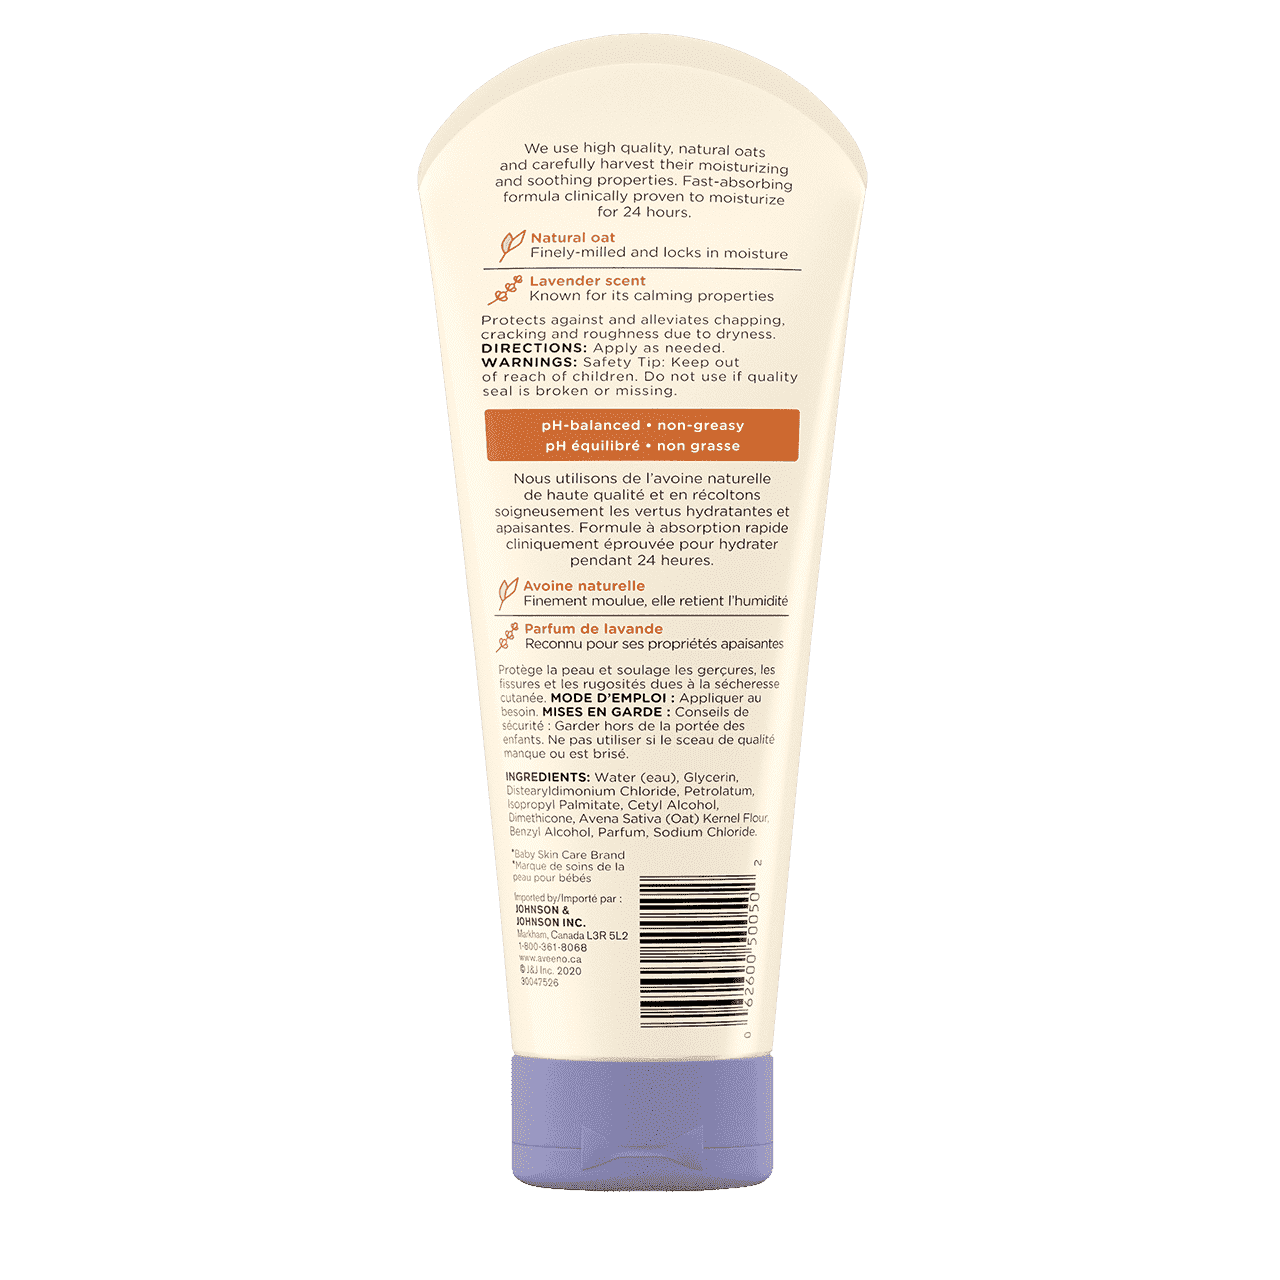 227ml of Aveeno Baby Calming Comfort lotion, back label